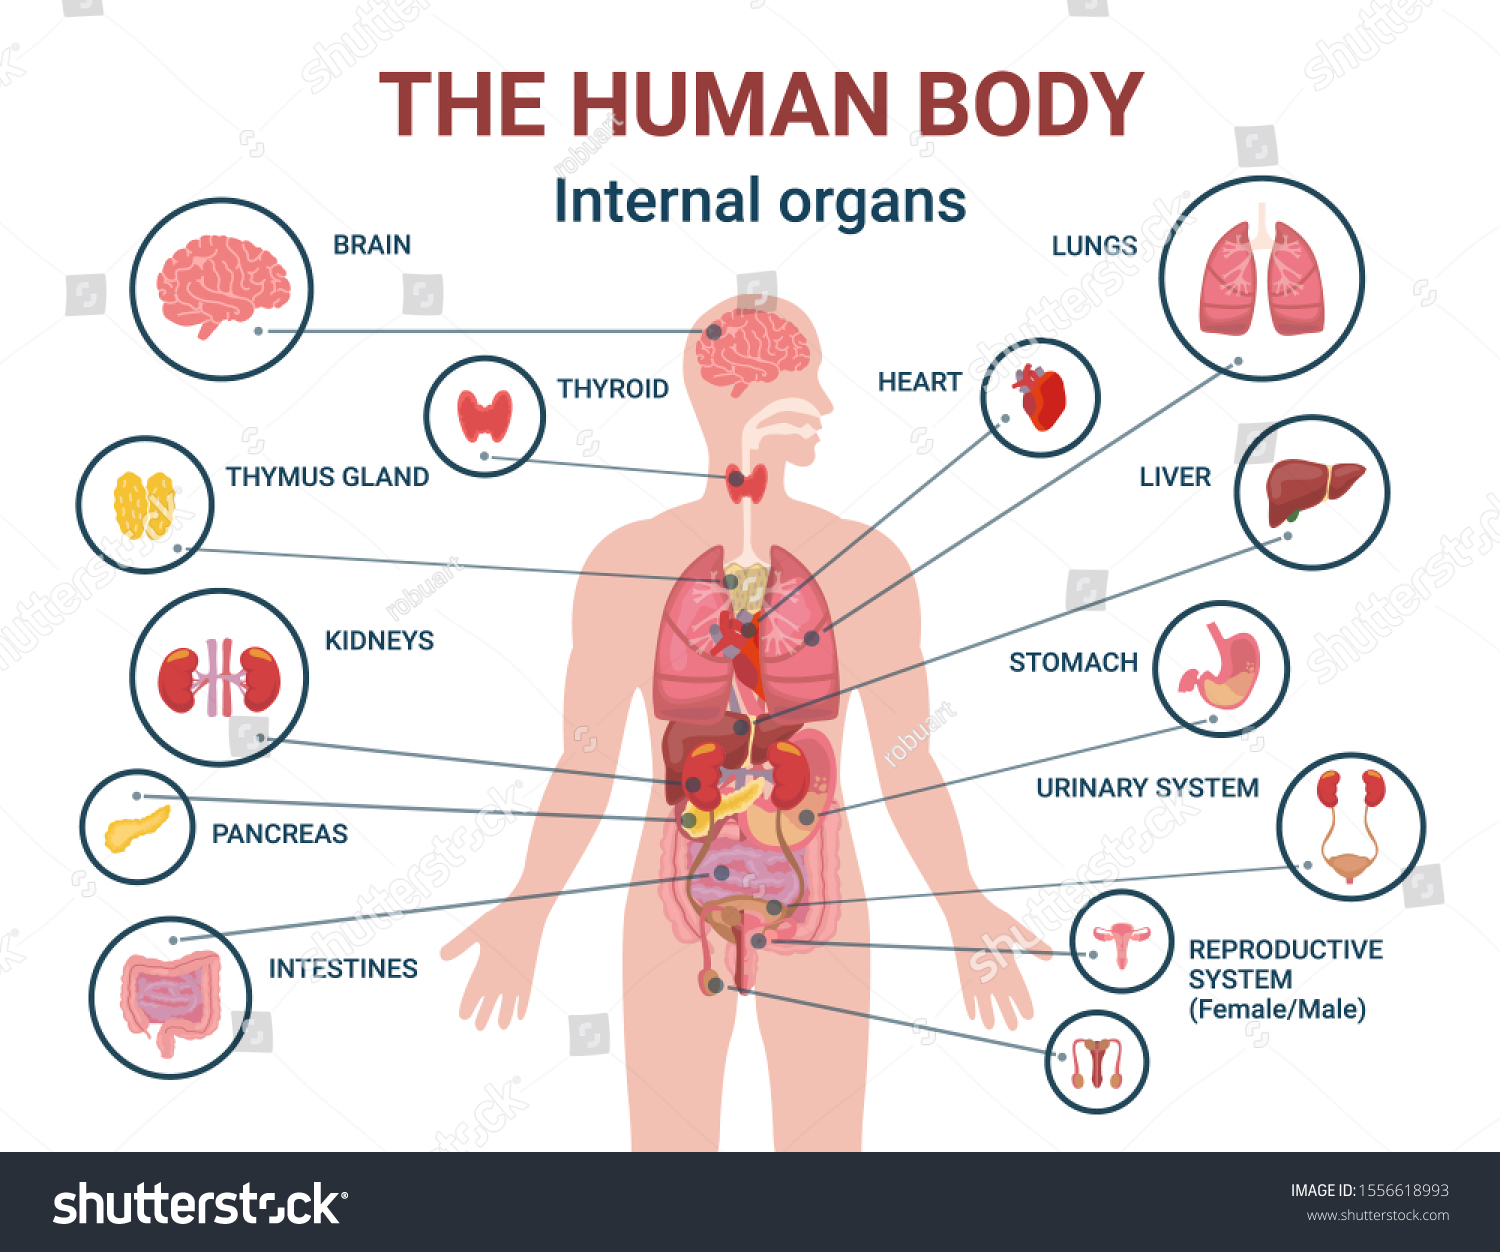 Internal Organs of the Human body